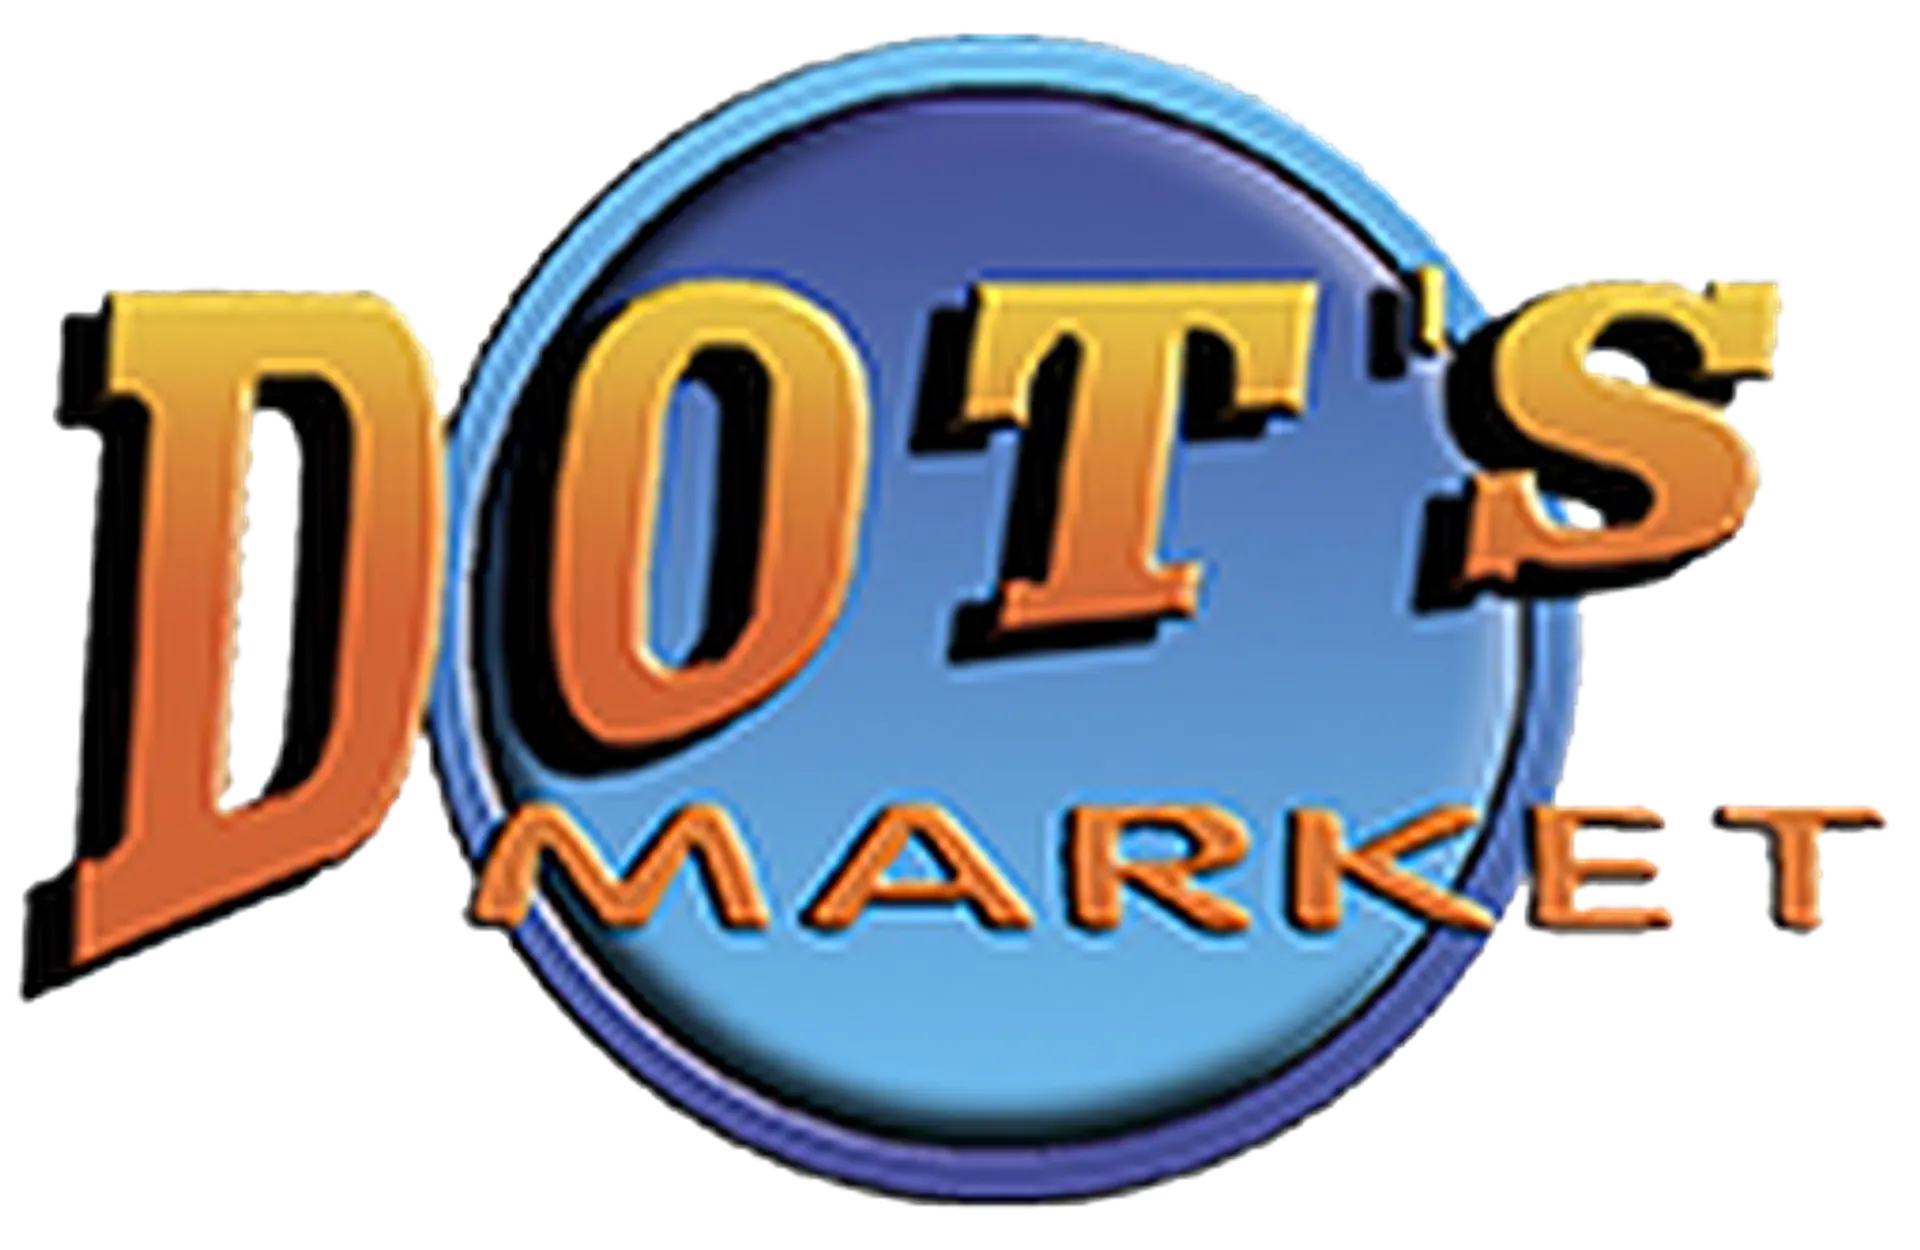 DOT’S MARKET logo